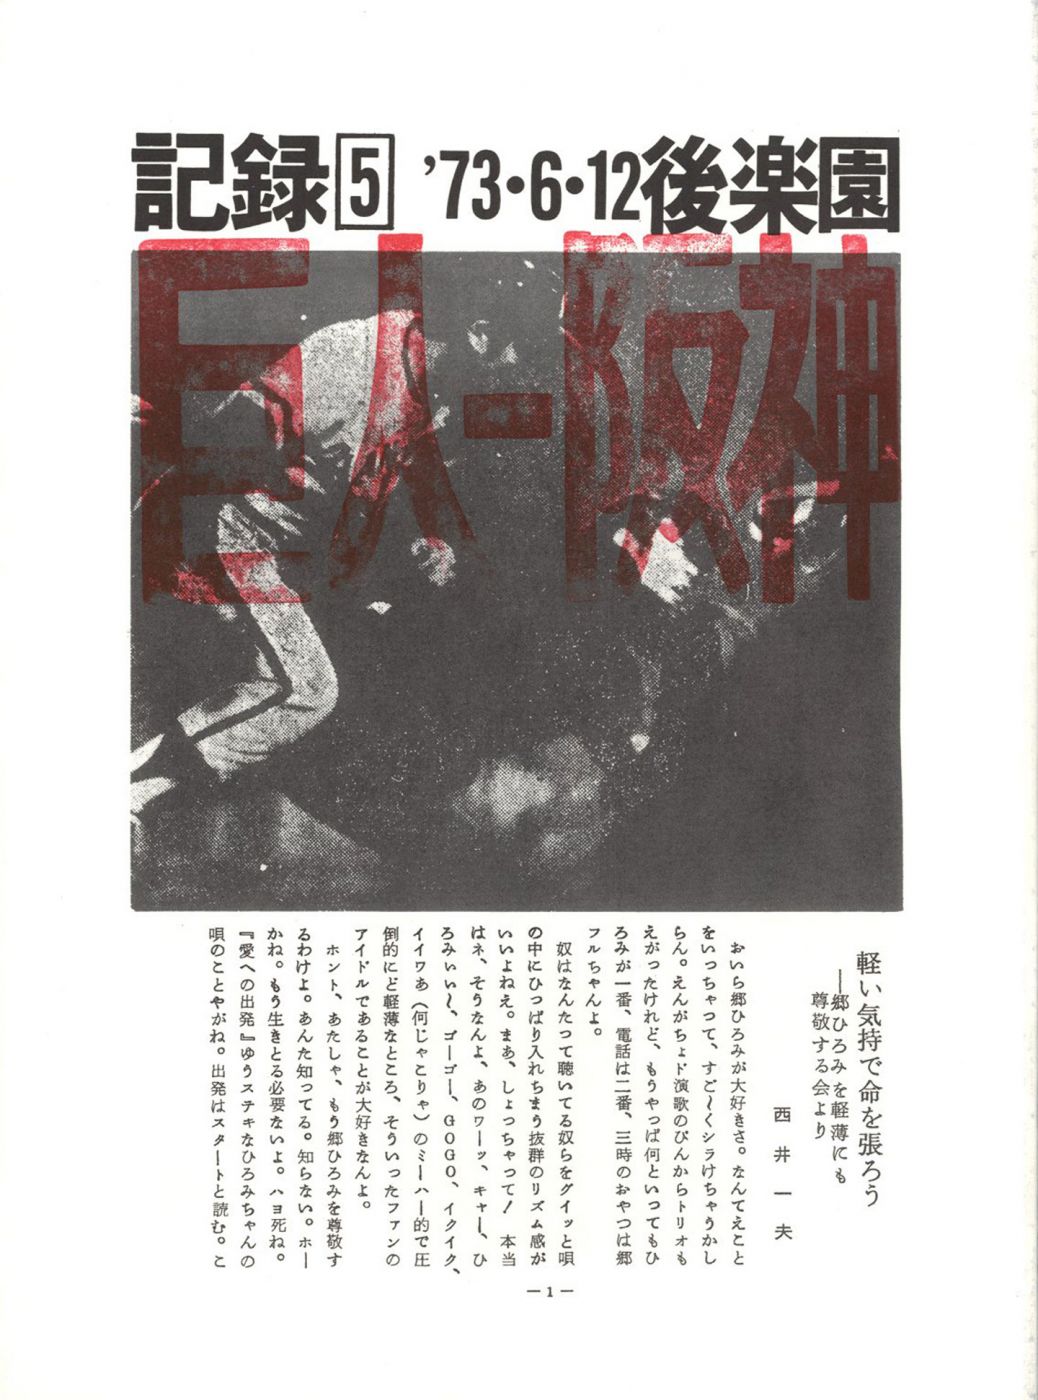 Daido Moriyama: Record Nos. 1-50 / Kiroku, Nos. 1-50, Complete Set (Includes Reprinted Edition of Nos. 1-5 and No. 6 through No. 50) [No. 20 through No. 50 only are SIGNED]